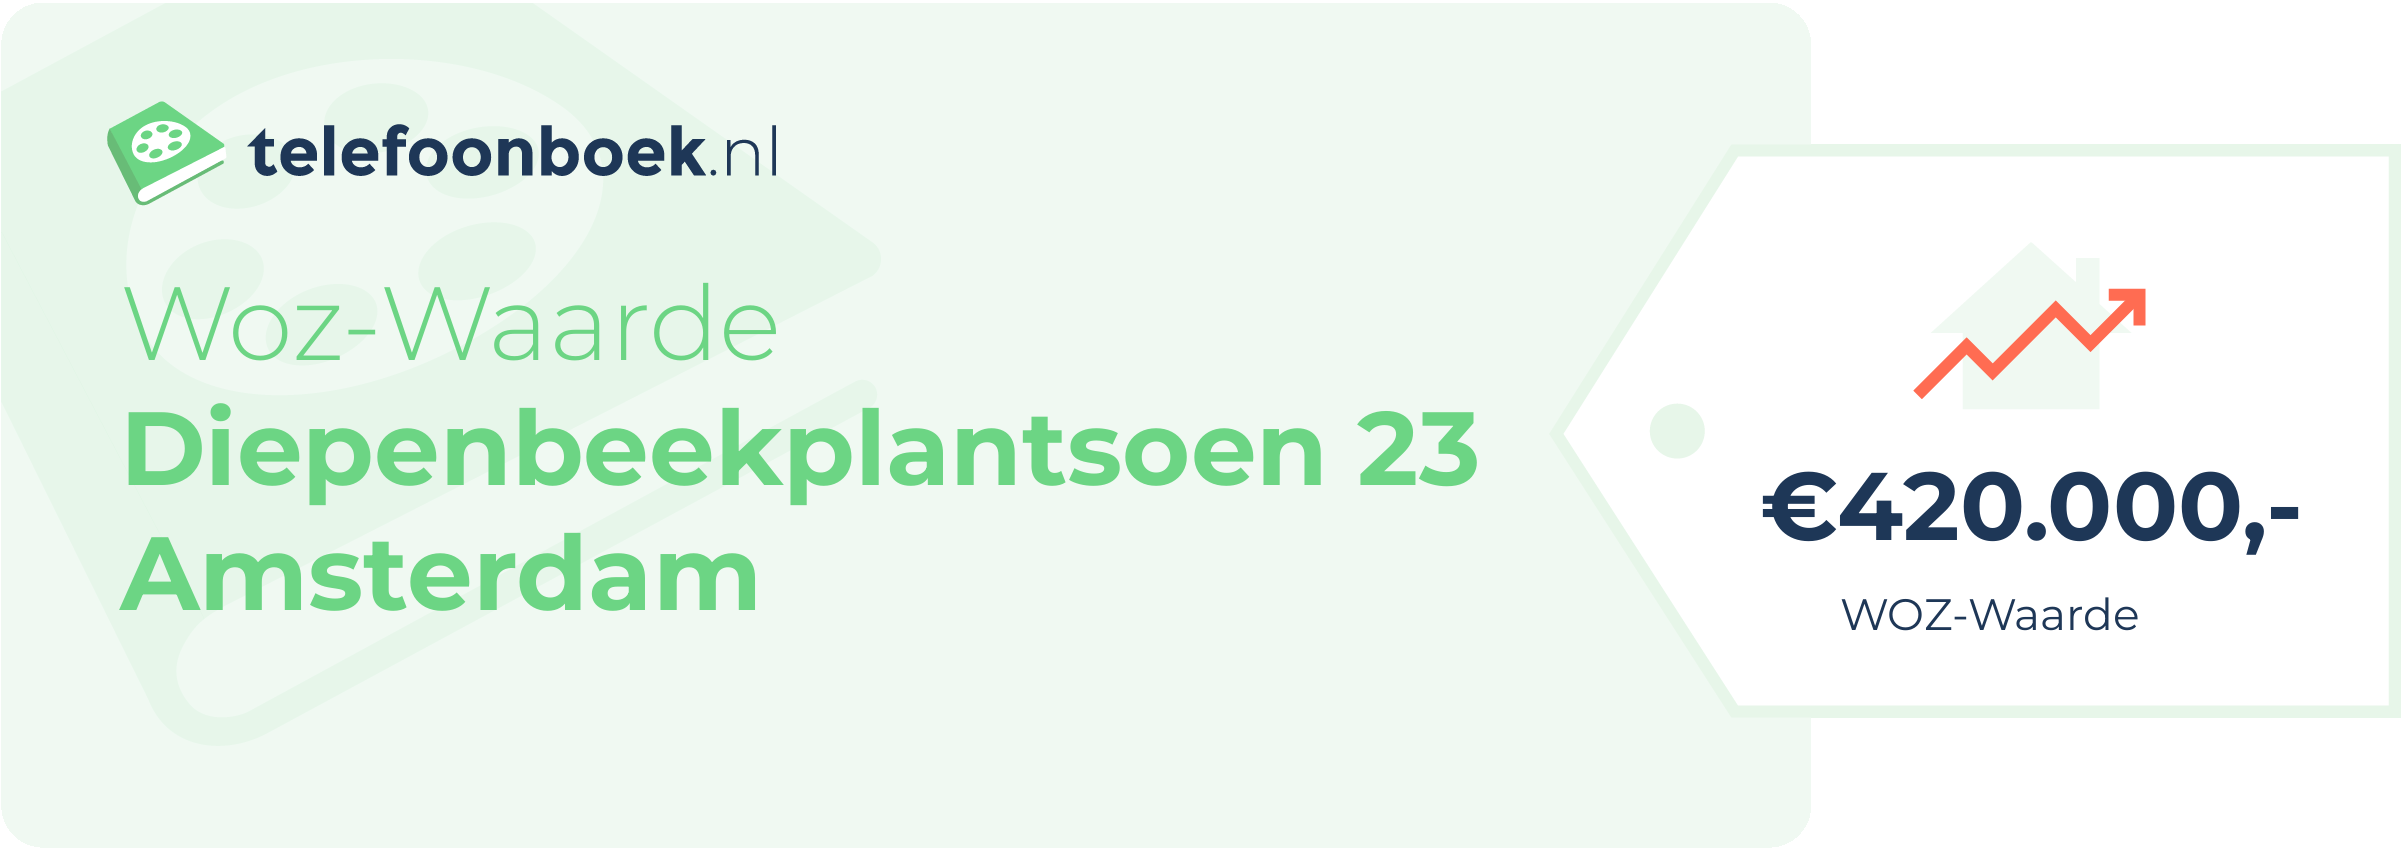 WOZ-waarde Diepenbeekplantsoen 23 Amsterdam